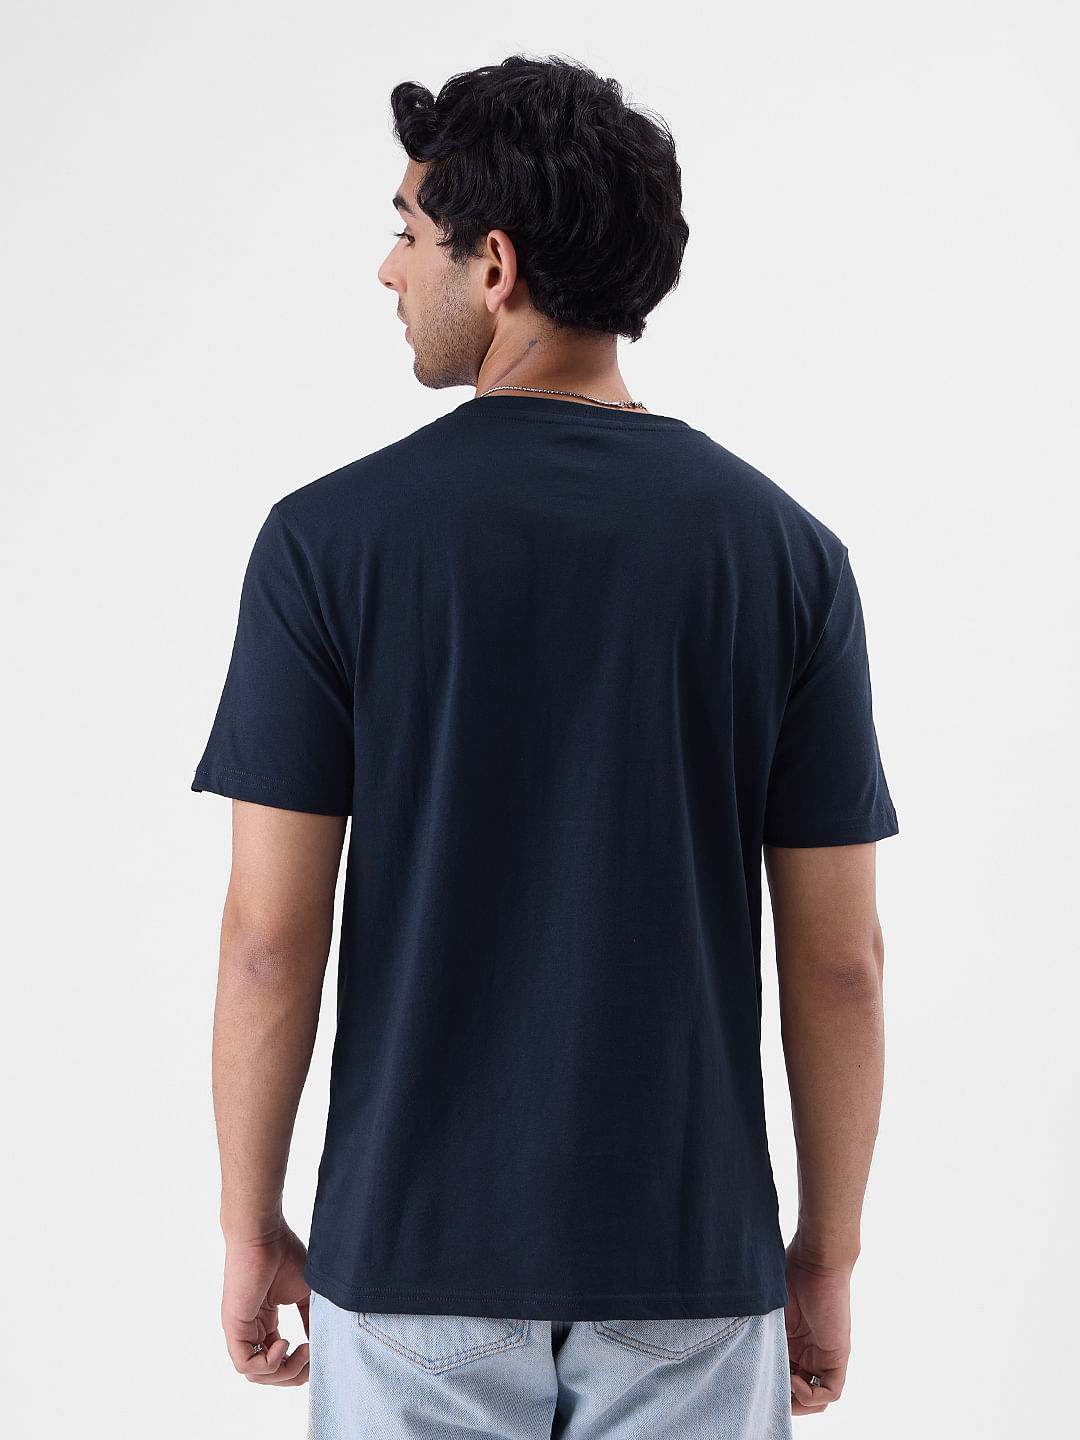 Buy TSS Originals: No F**ks To Give Half Sleeve T-Shirts online at The ...